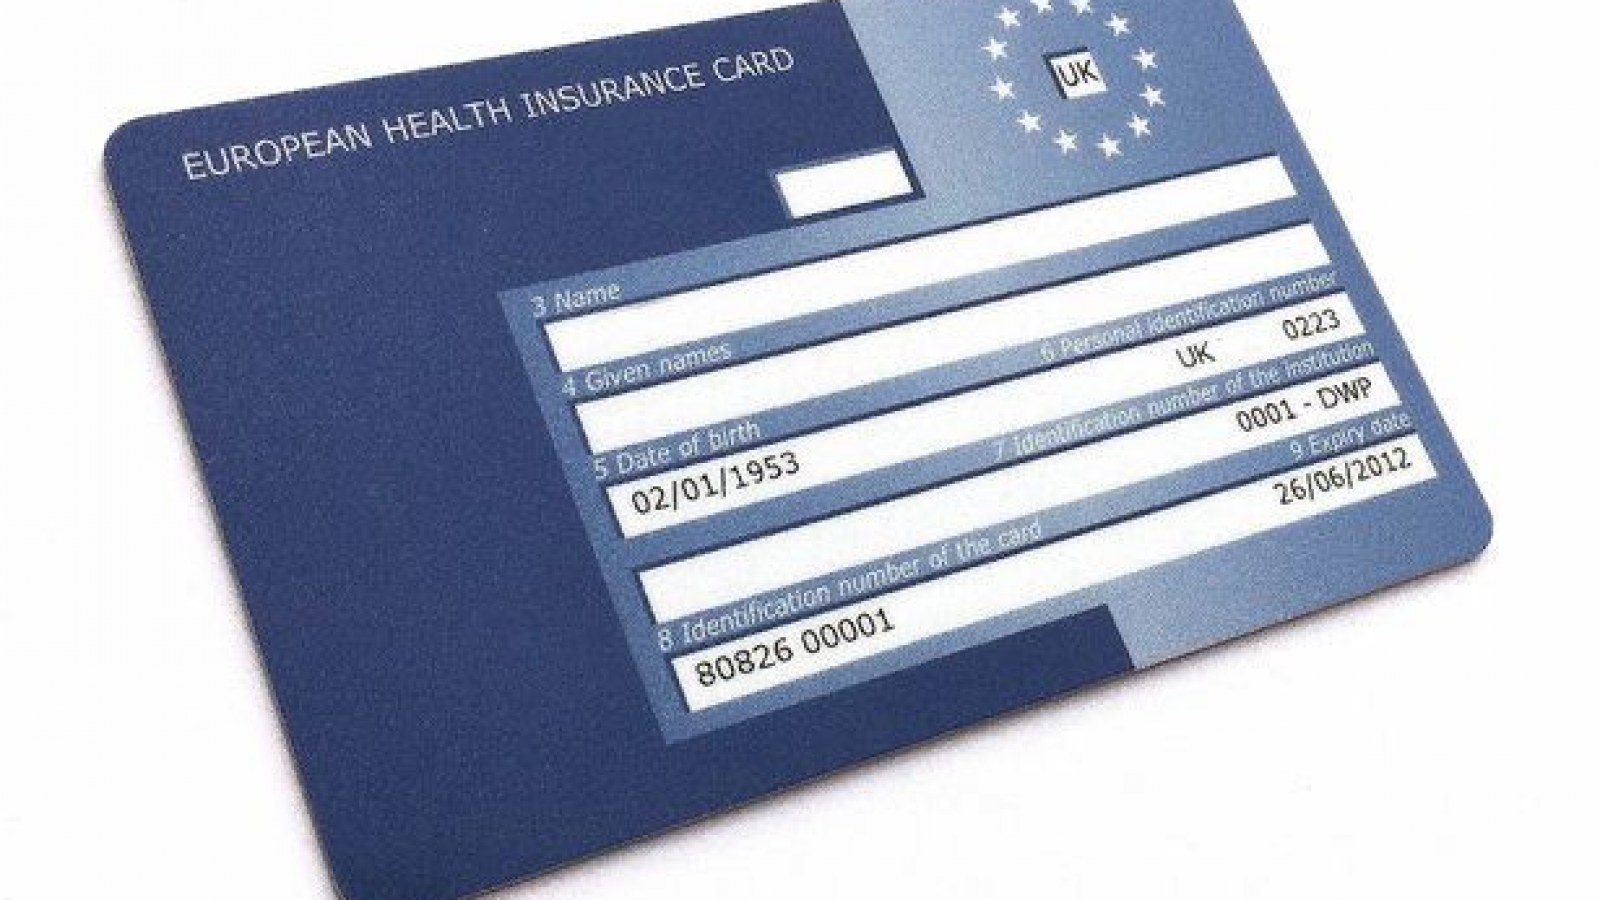 European Health Insurance Card France - Always Be Ready